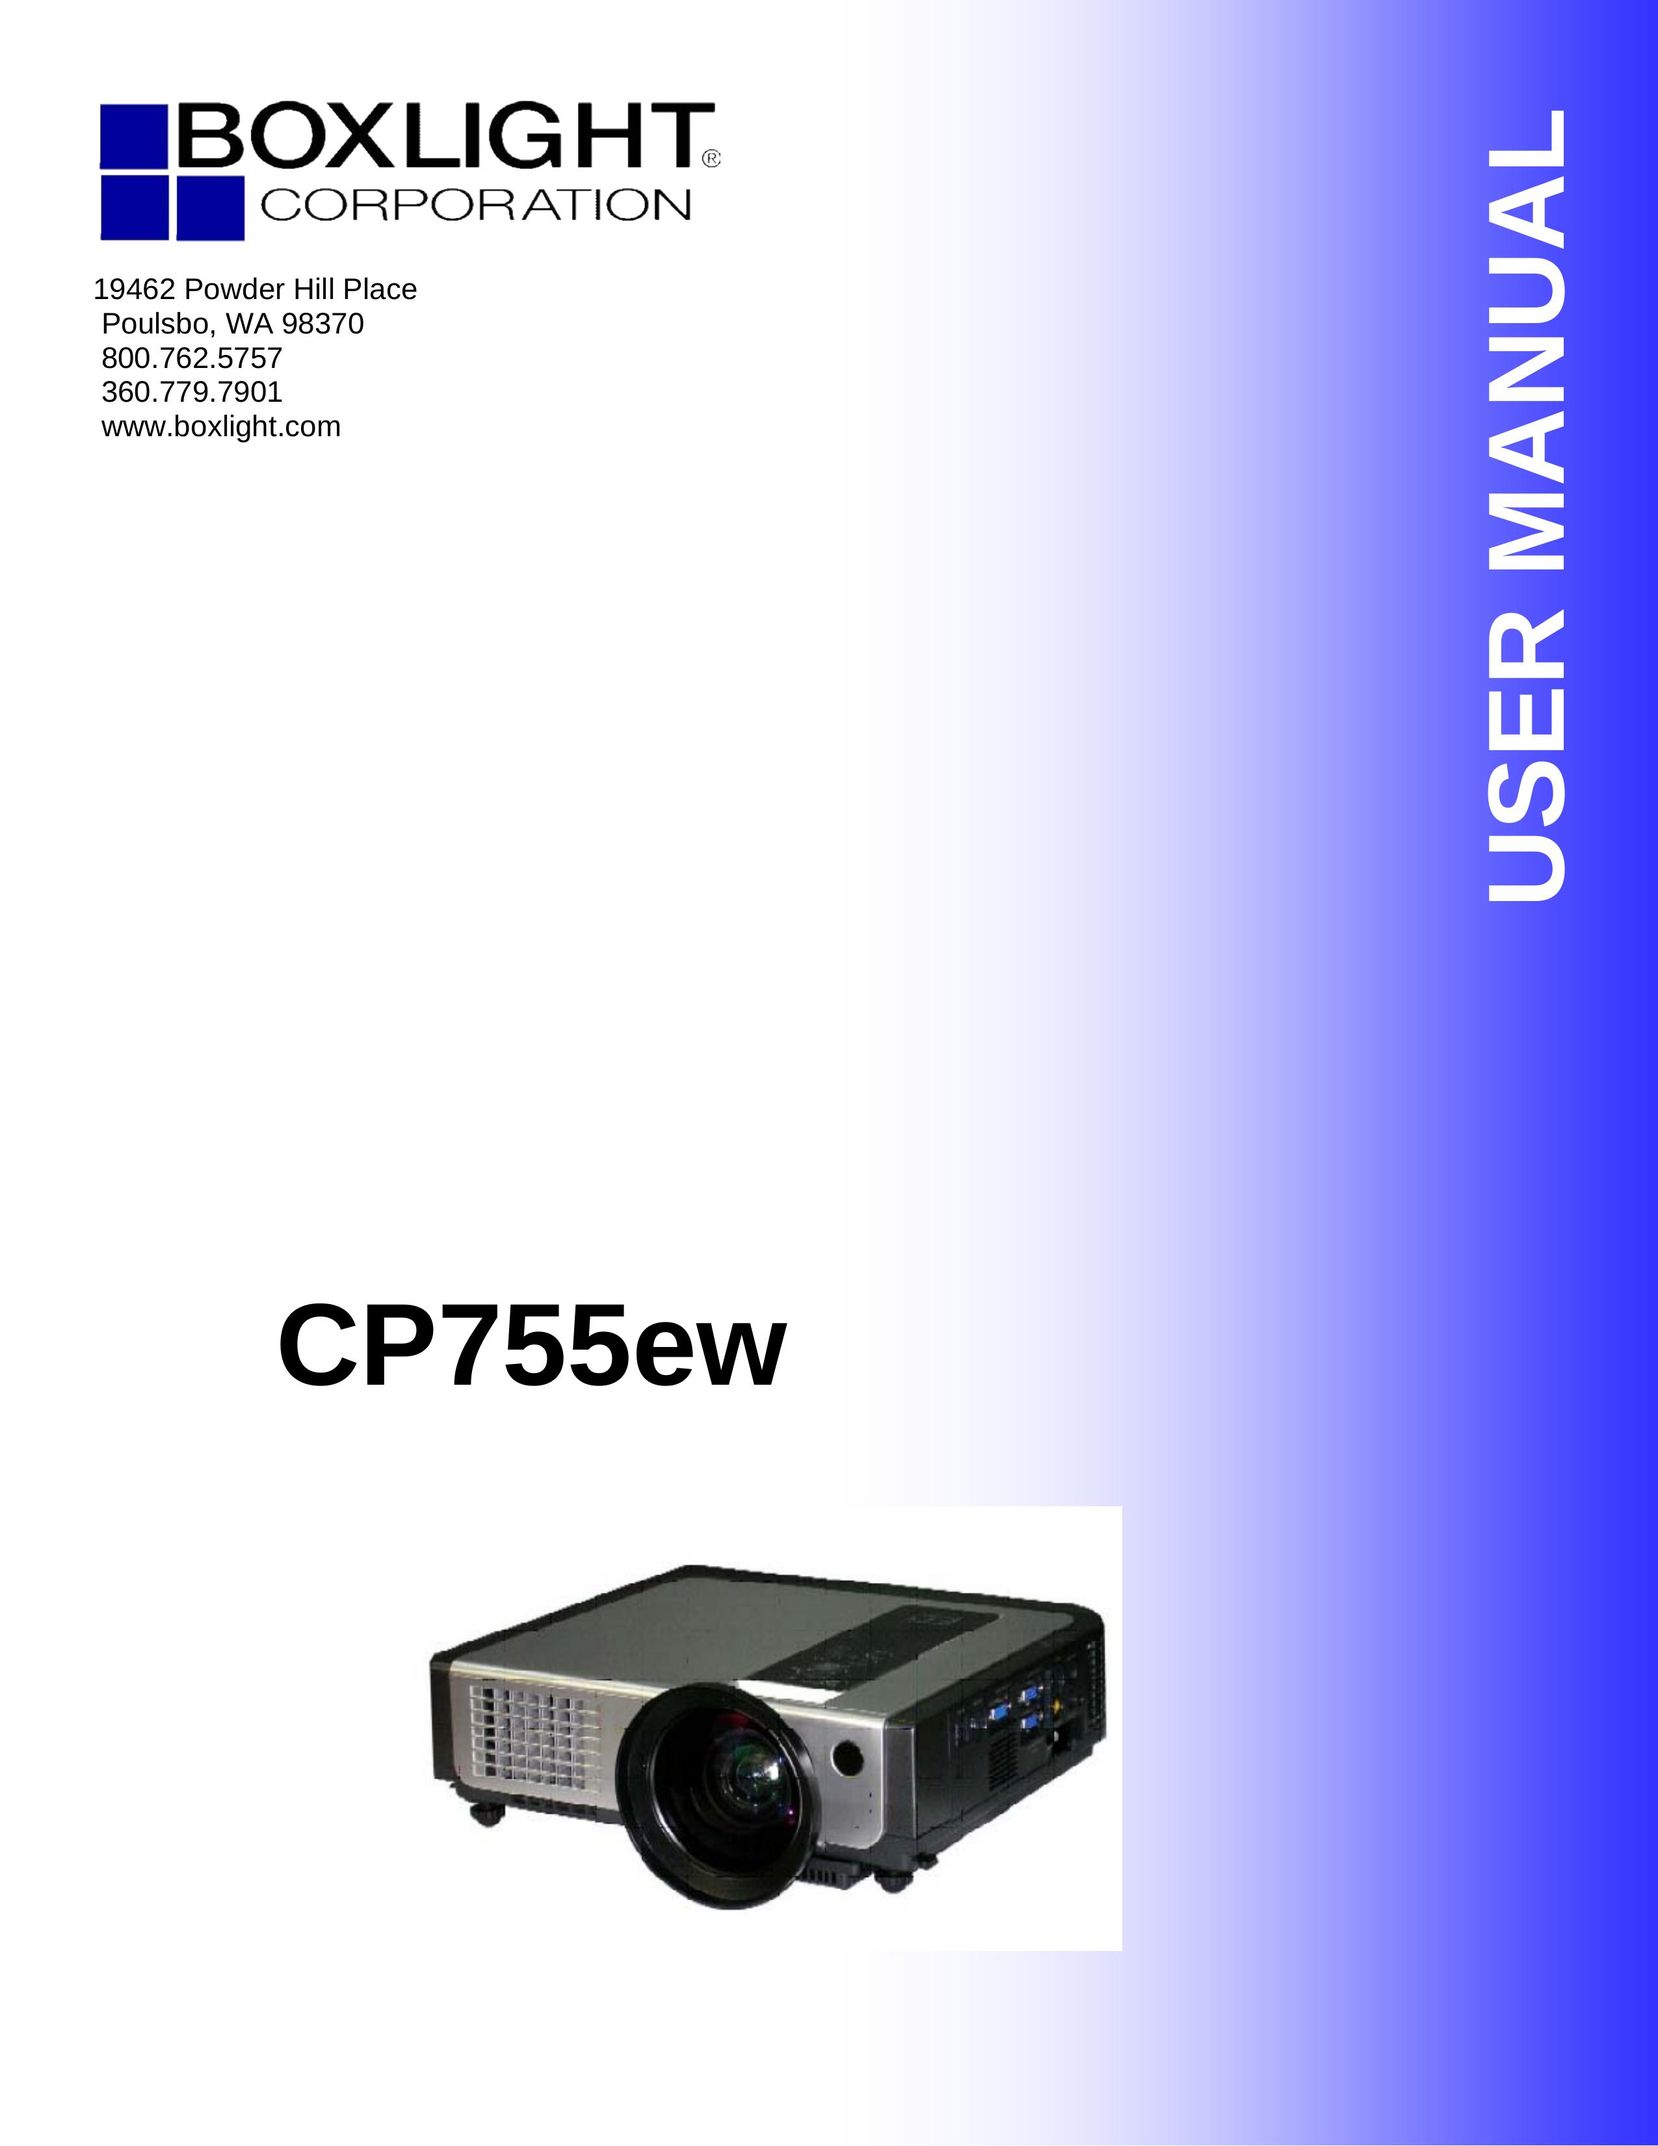 BOXLIGHT CP755ew Projector User Manual